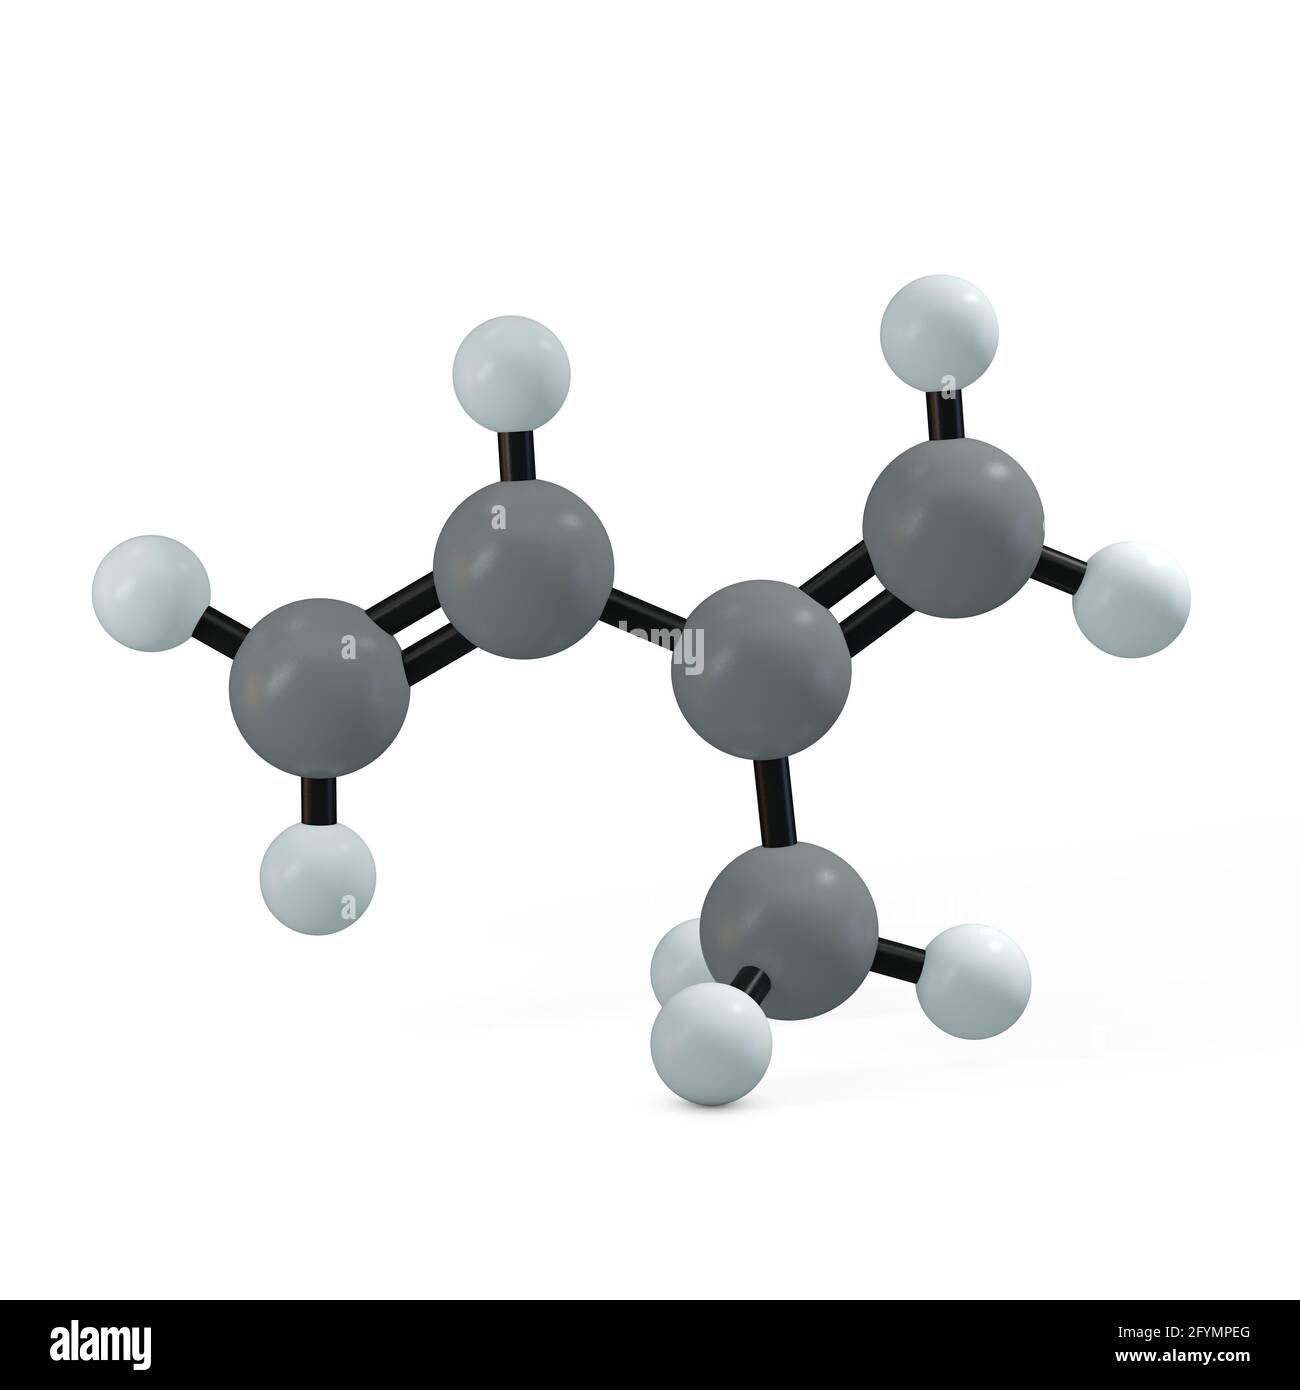 Rubber molecule, illustration Stock Photo - Alamy